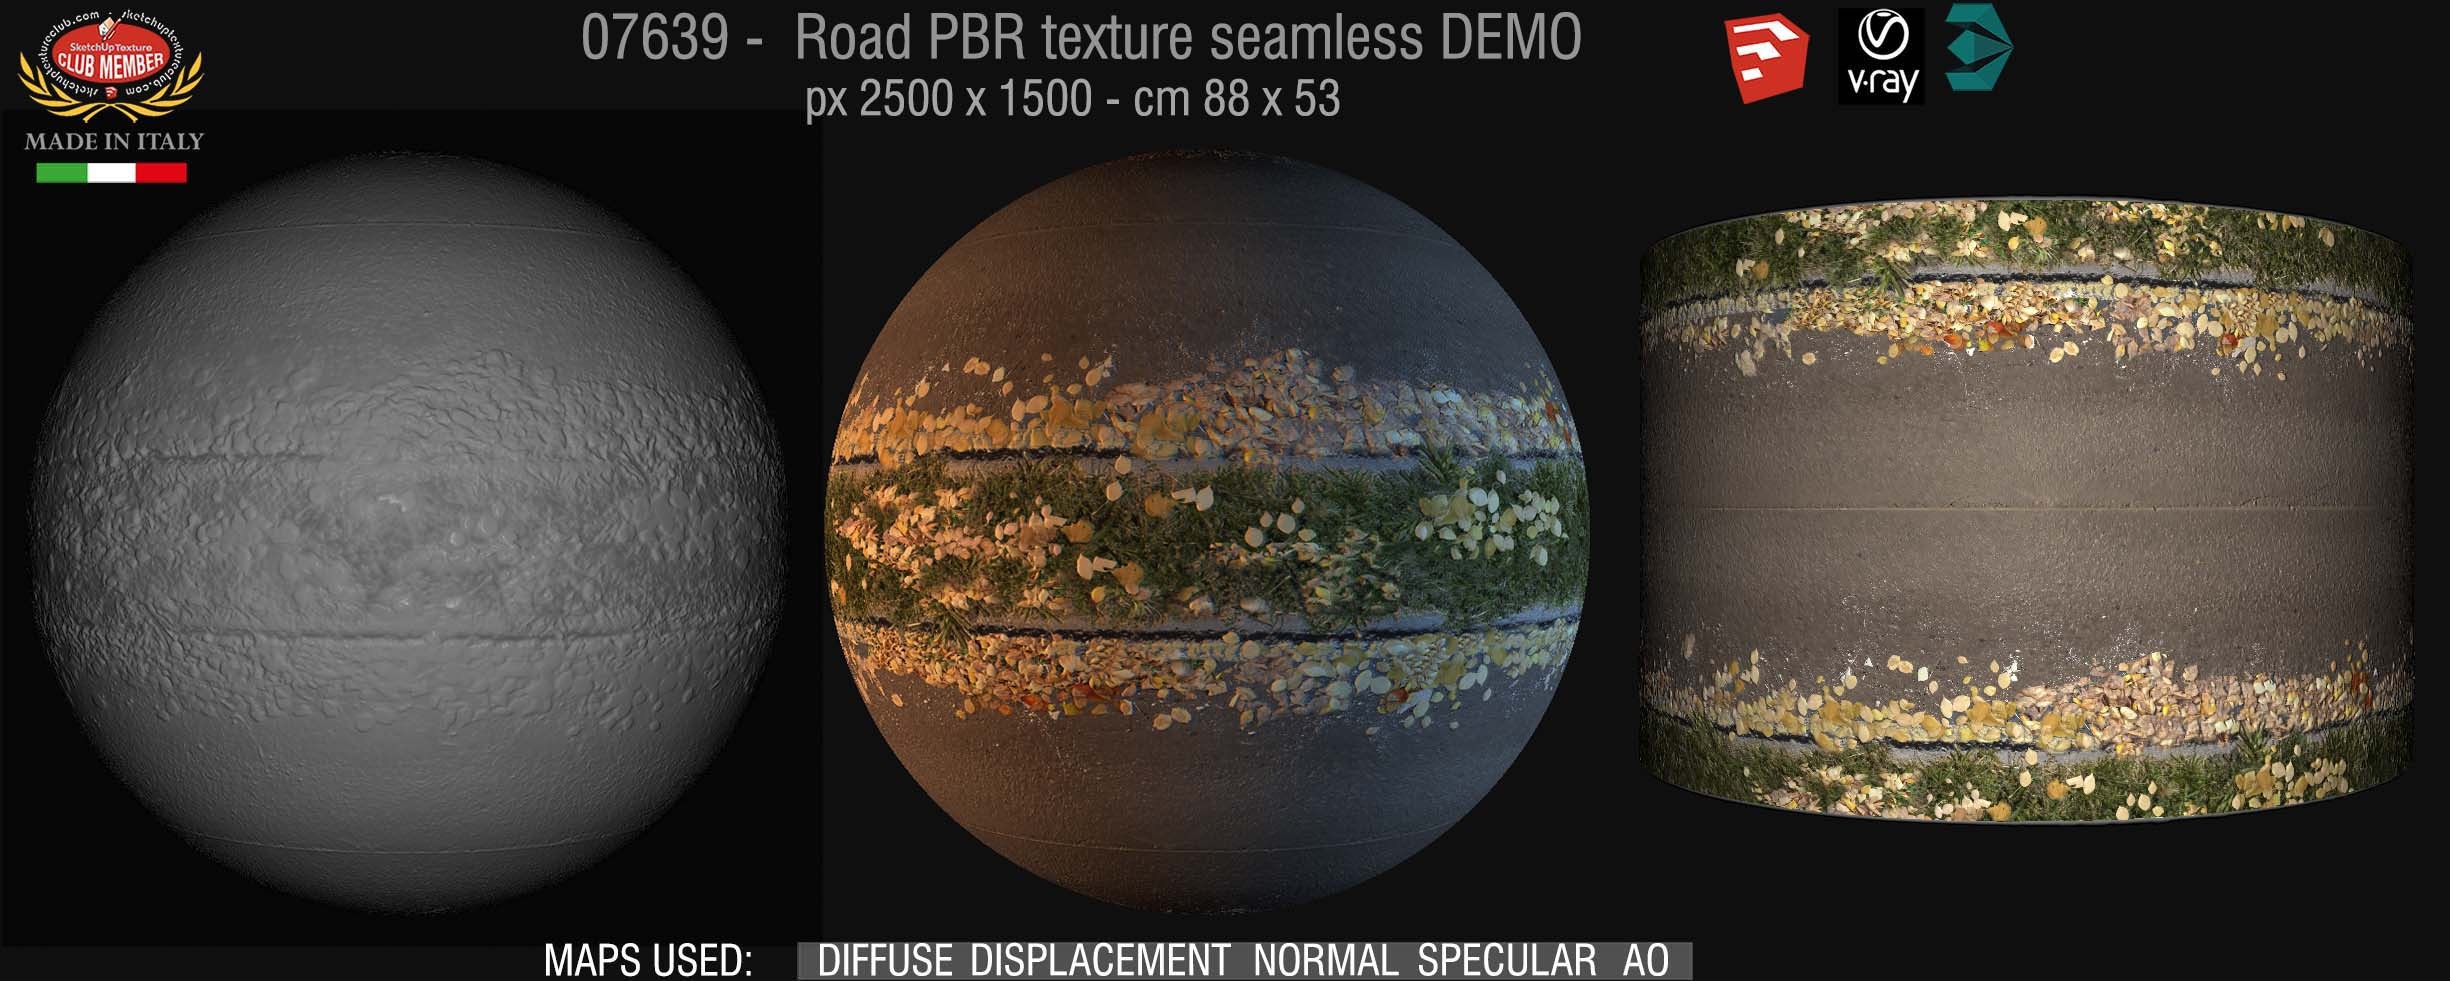 07639 road PBR texture seamless DEMO